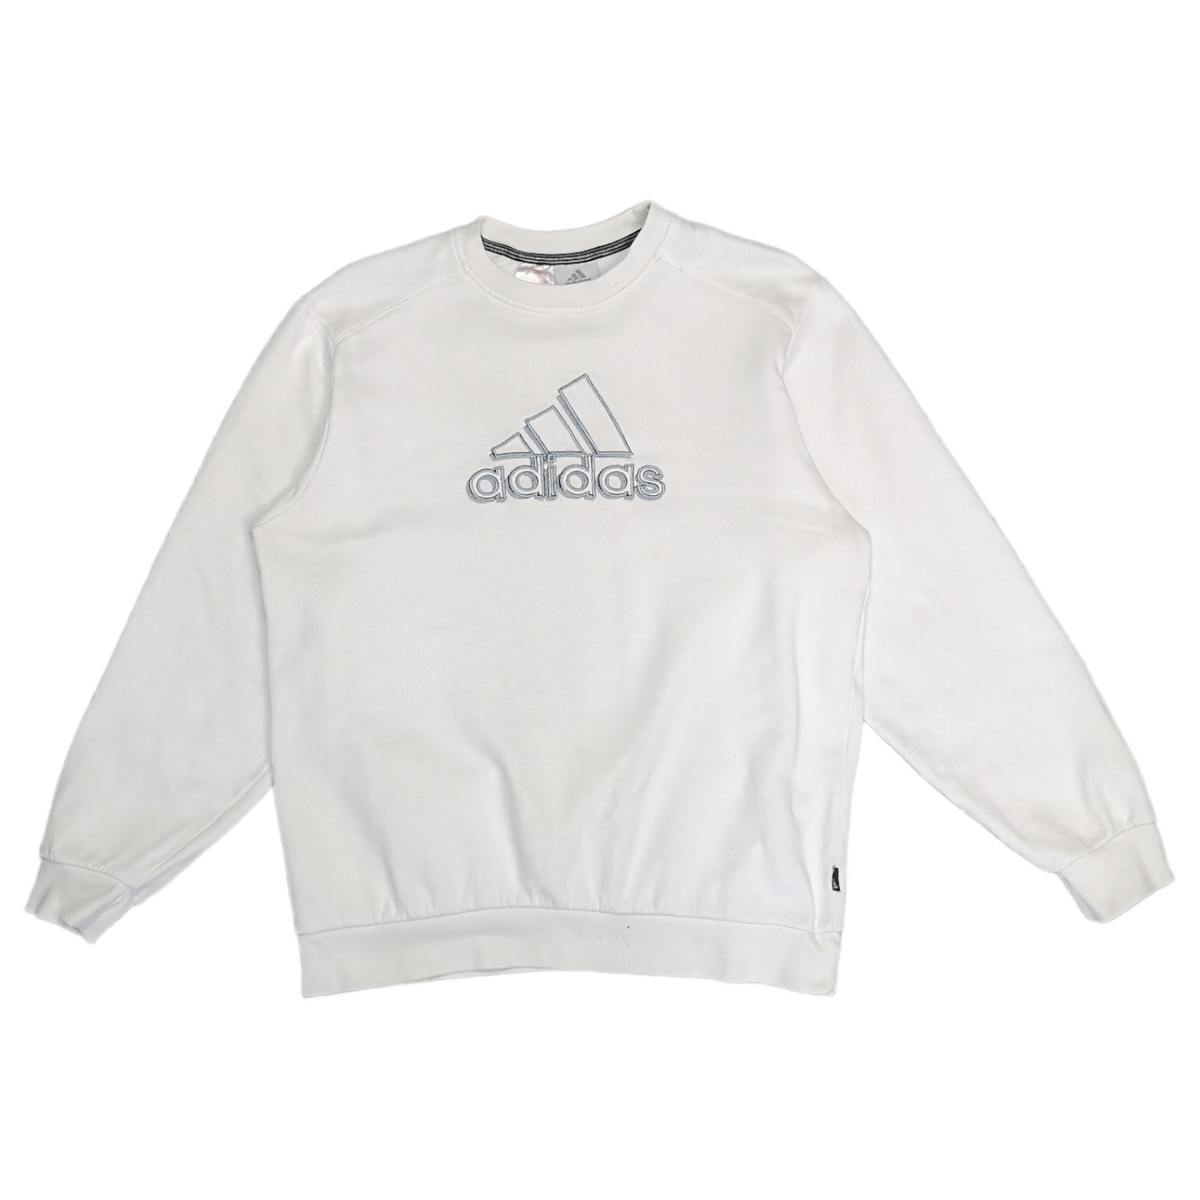 Y2K Adidas Big Logo Sweatshirt - Size Medium